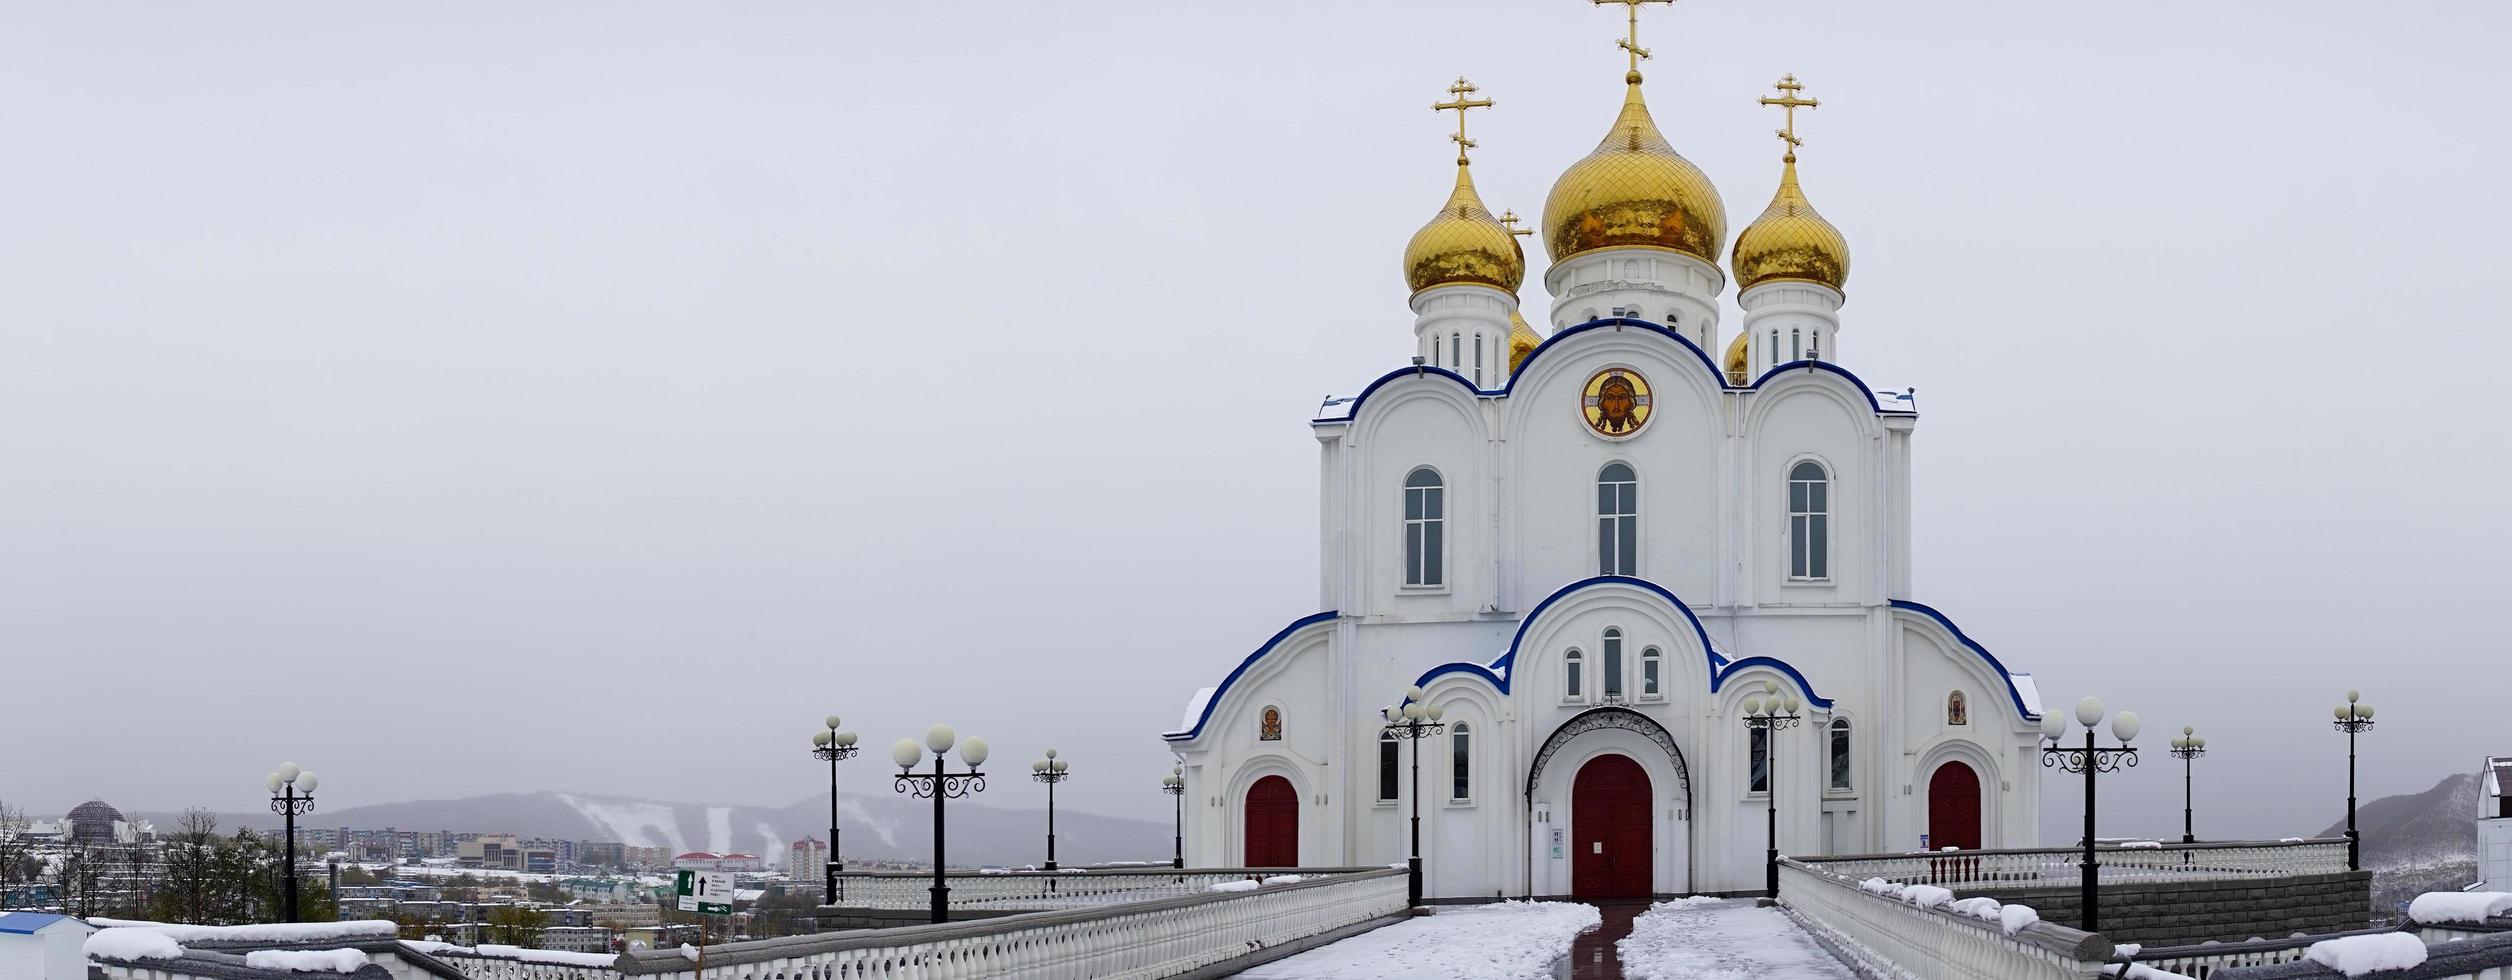 Russisch-Orthodoxe Kathedrale - Petropawlowsk-Kamtschatski, Russland foto